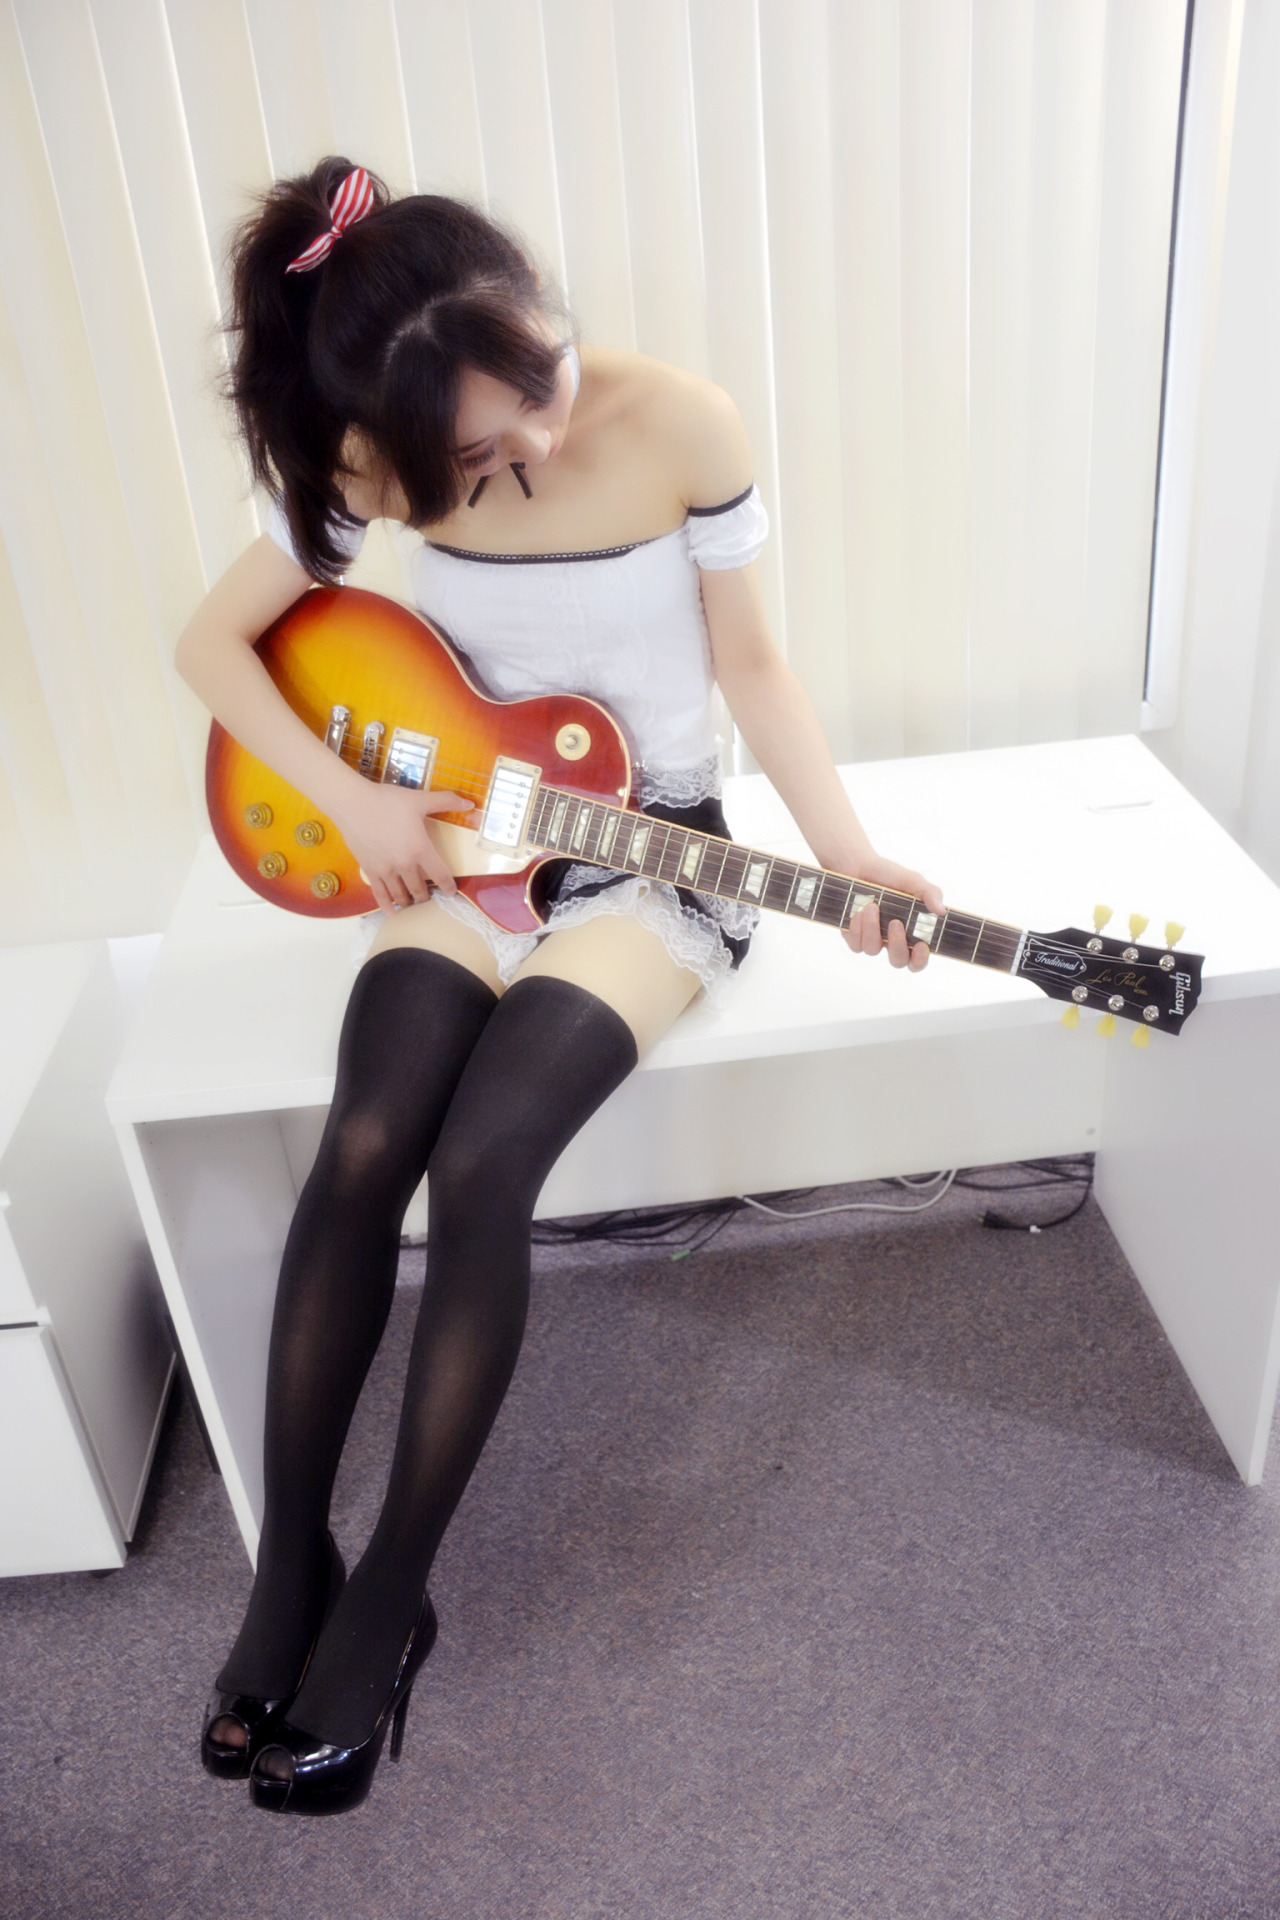 saori-kawaii:  New photo time @saori-kawaii​ ~~ my new Gibson Les Paul~~~ Do I